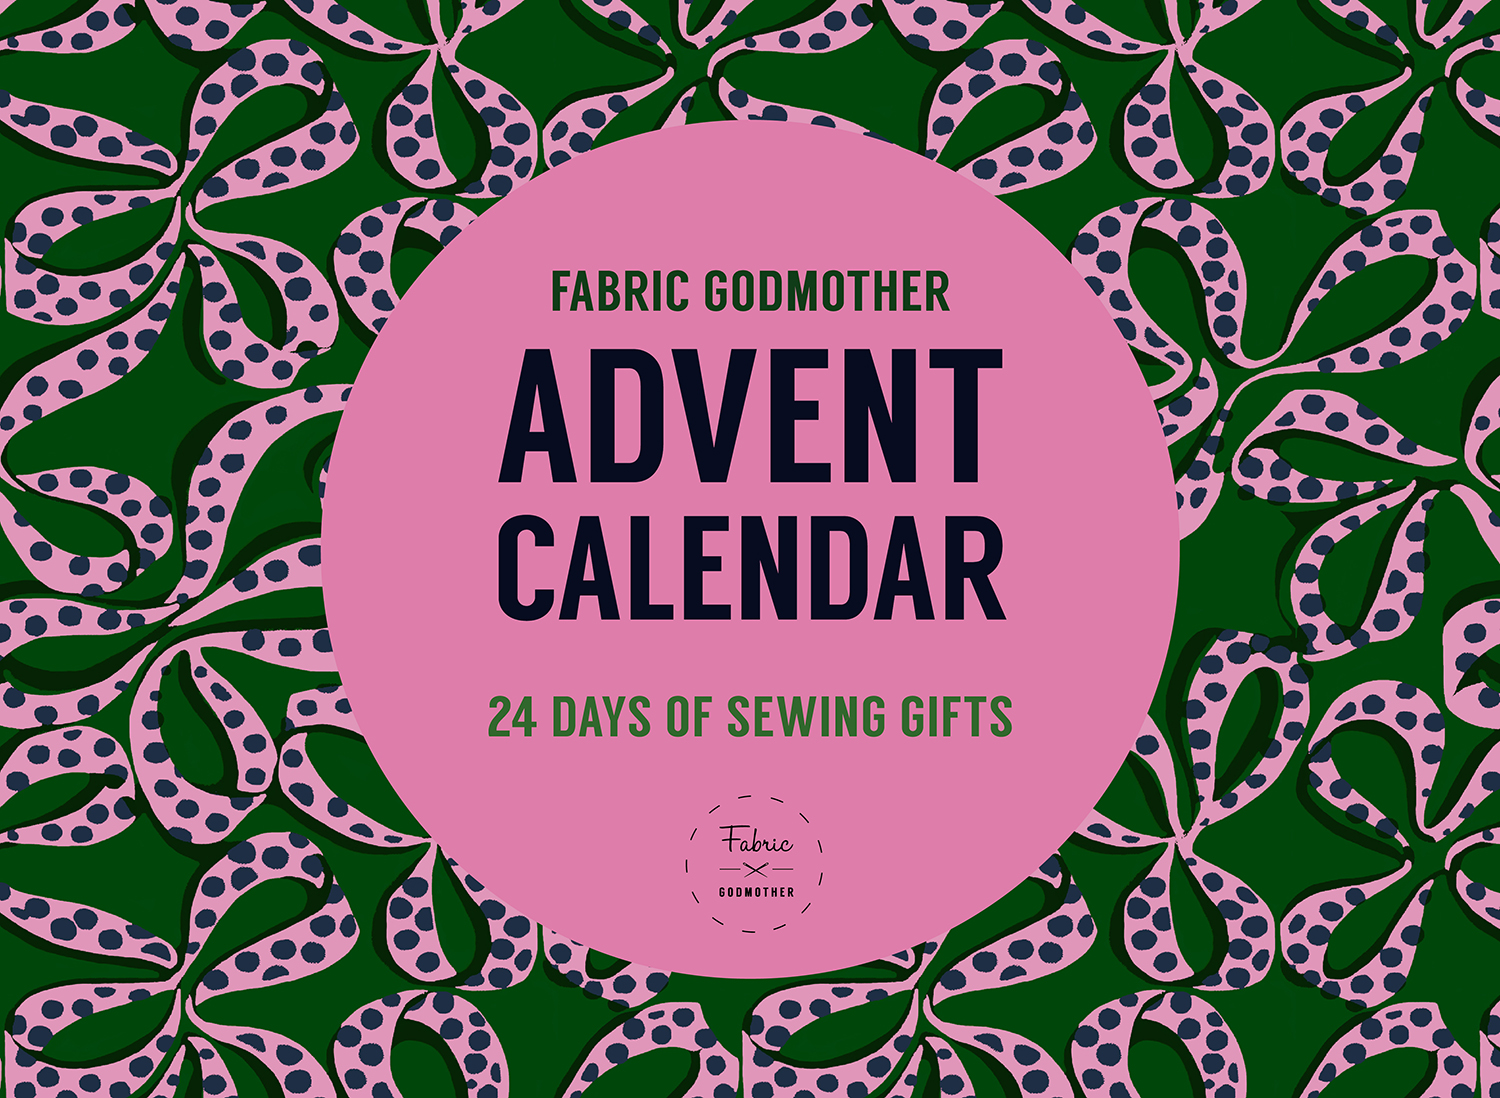 NEW DESIGNER FABRICS - Fabric Godmother